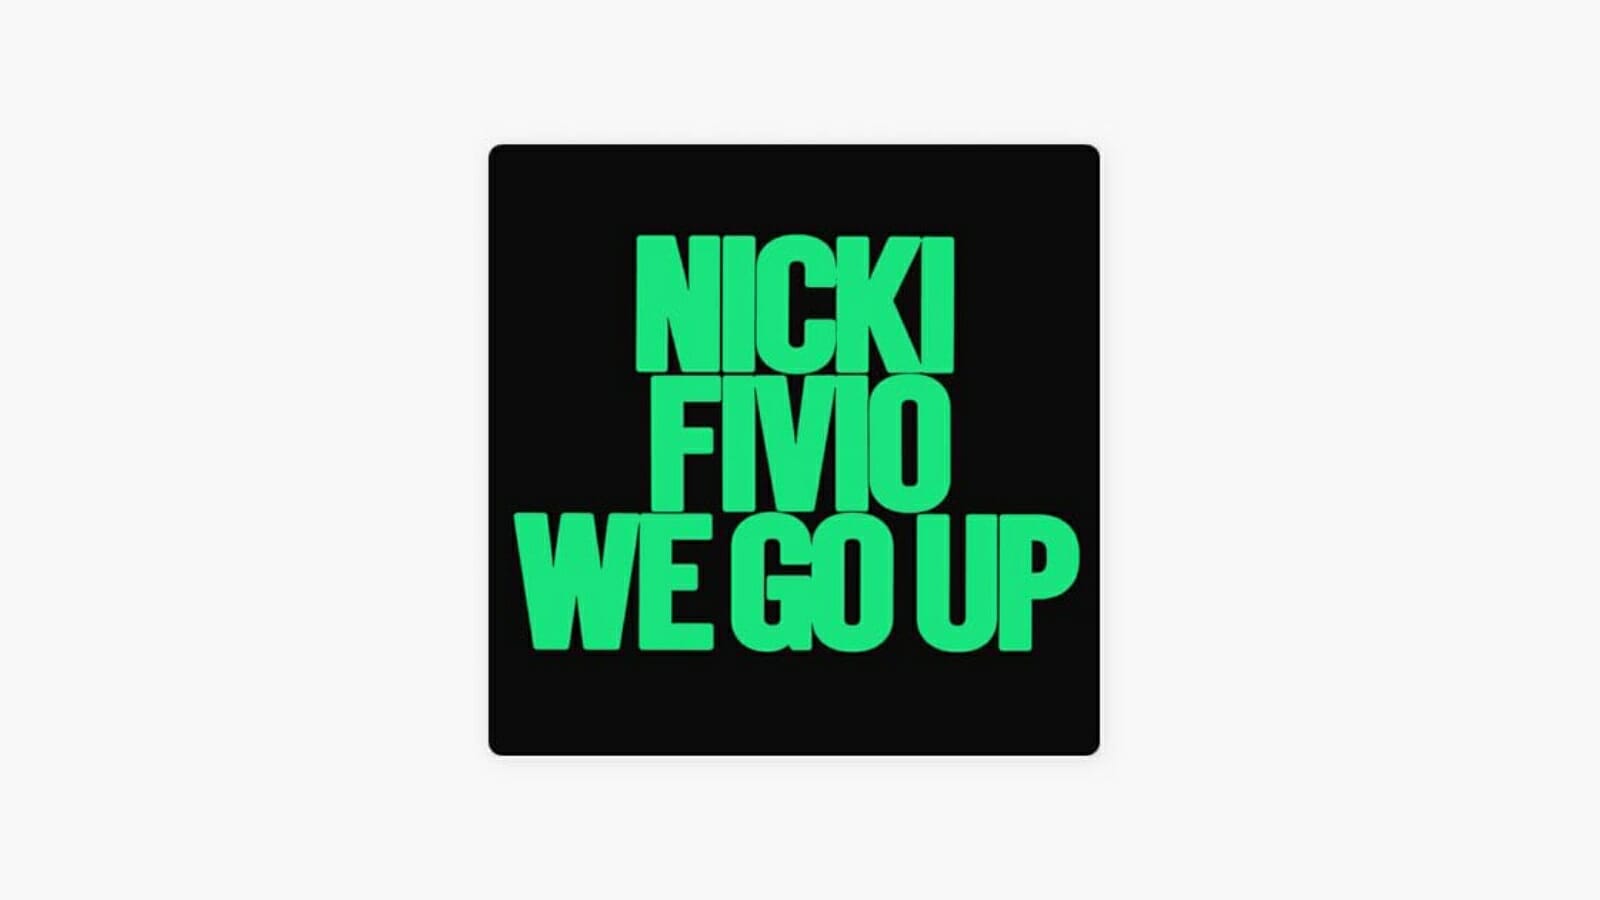 Nicki Minaj's latest track with Fivio Foreign